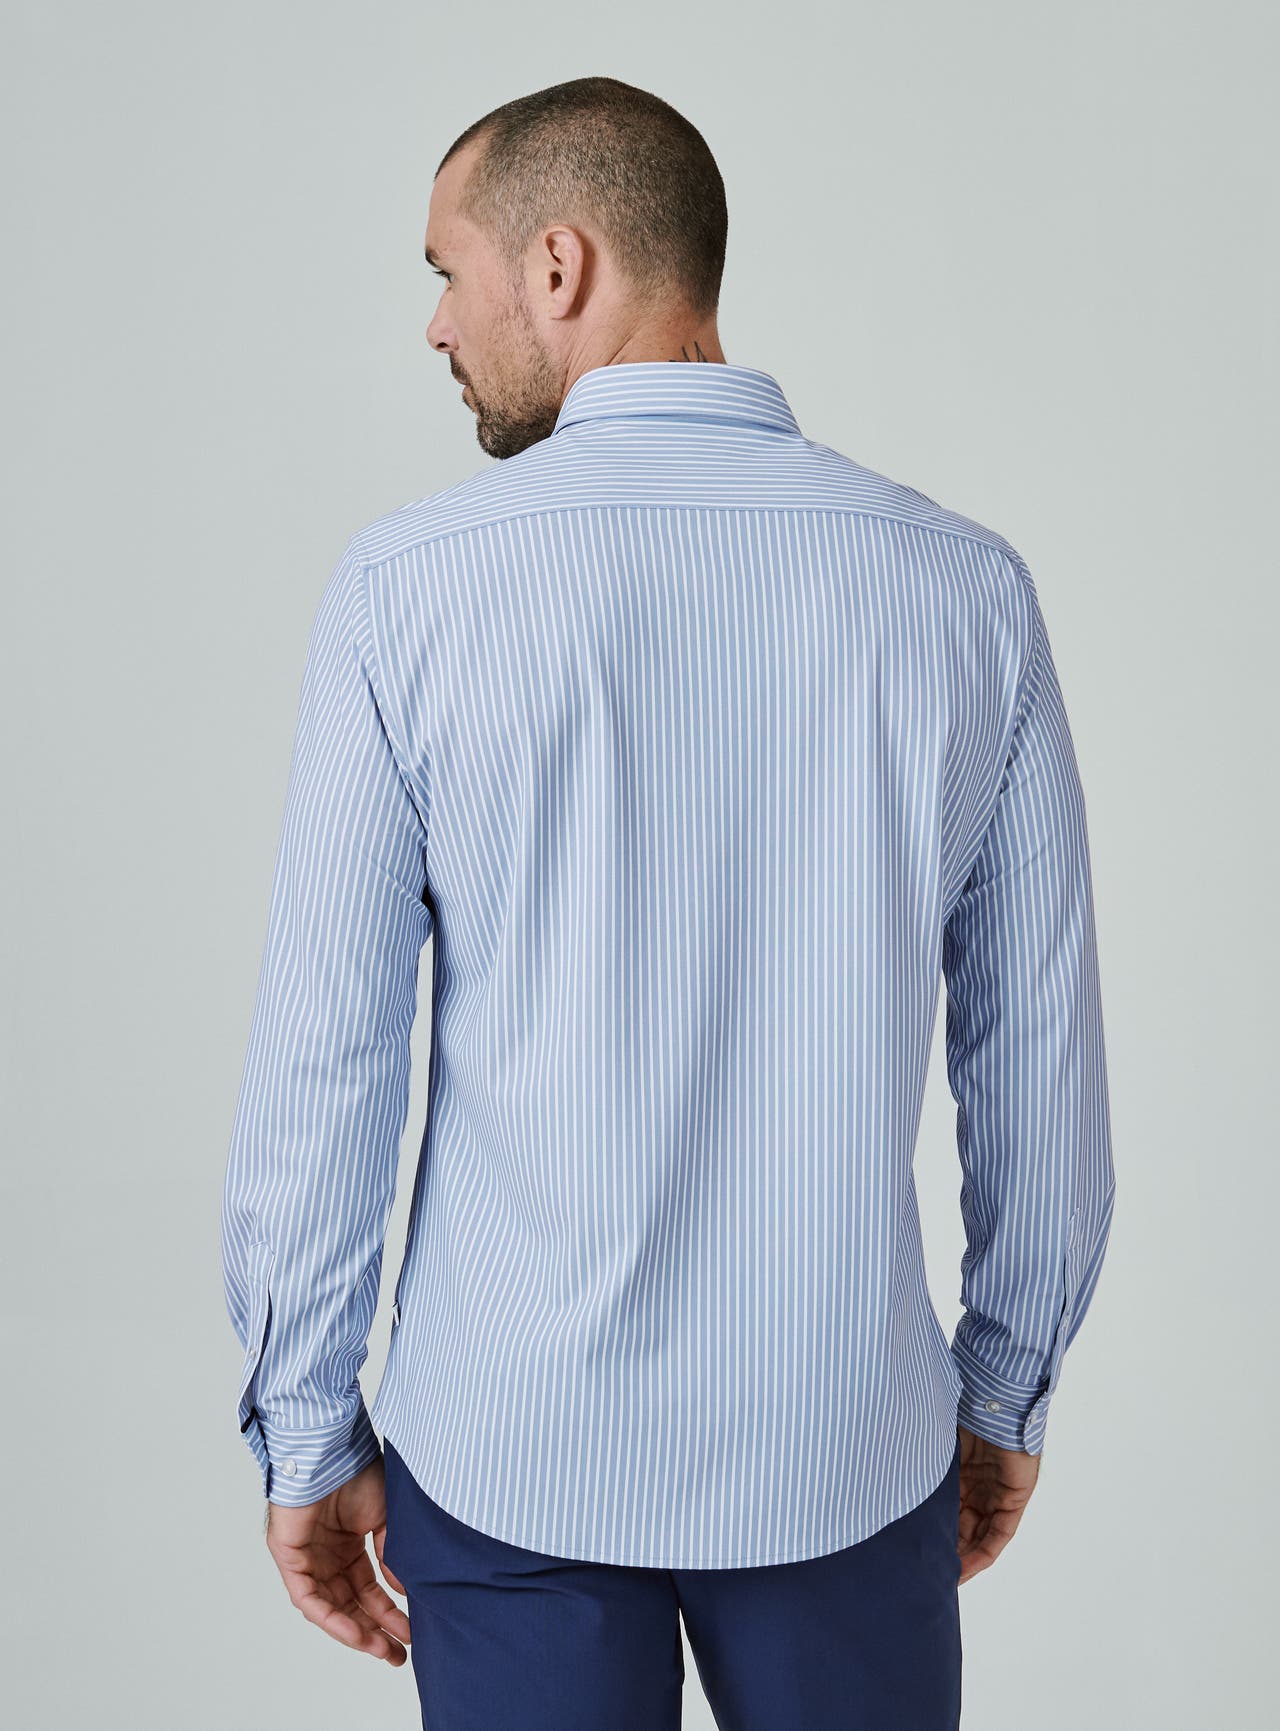 Jackson Long Sleeve Shirt - LIGHT BLUE